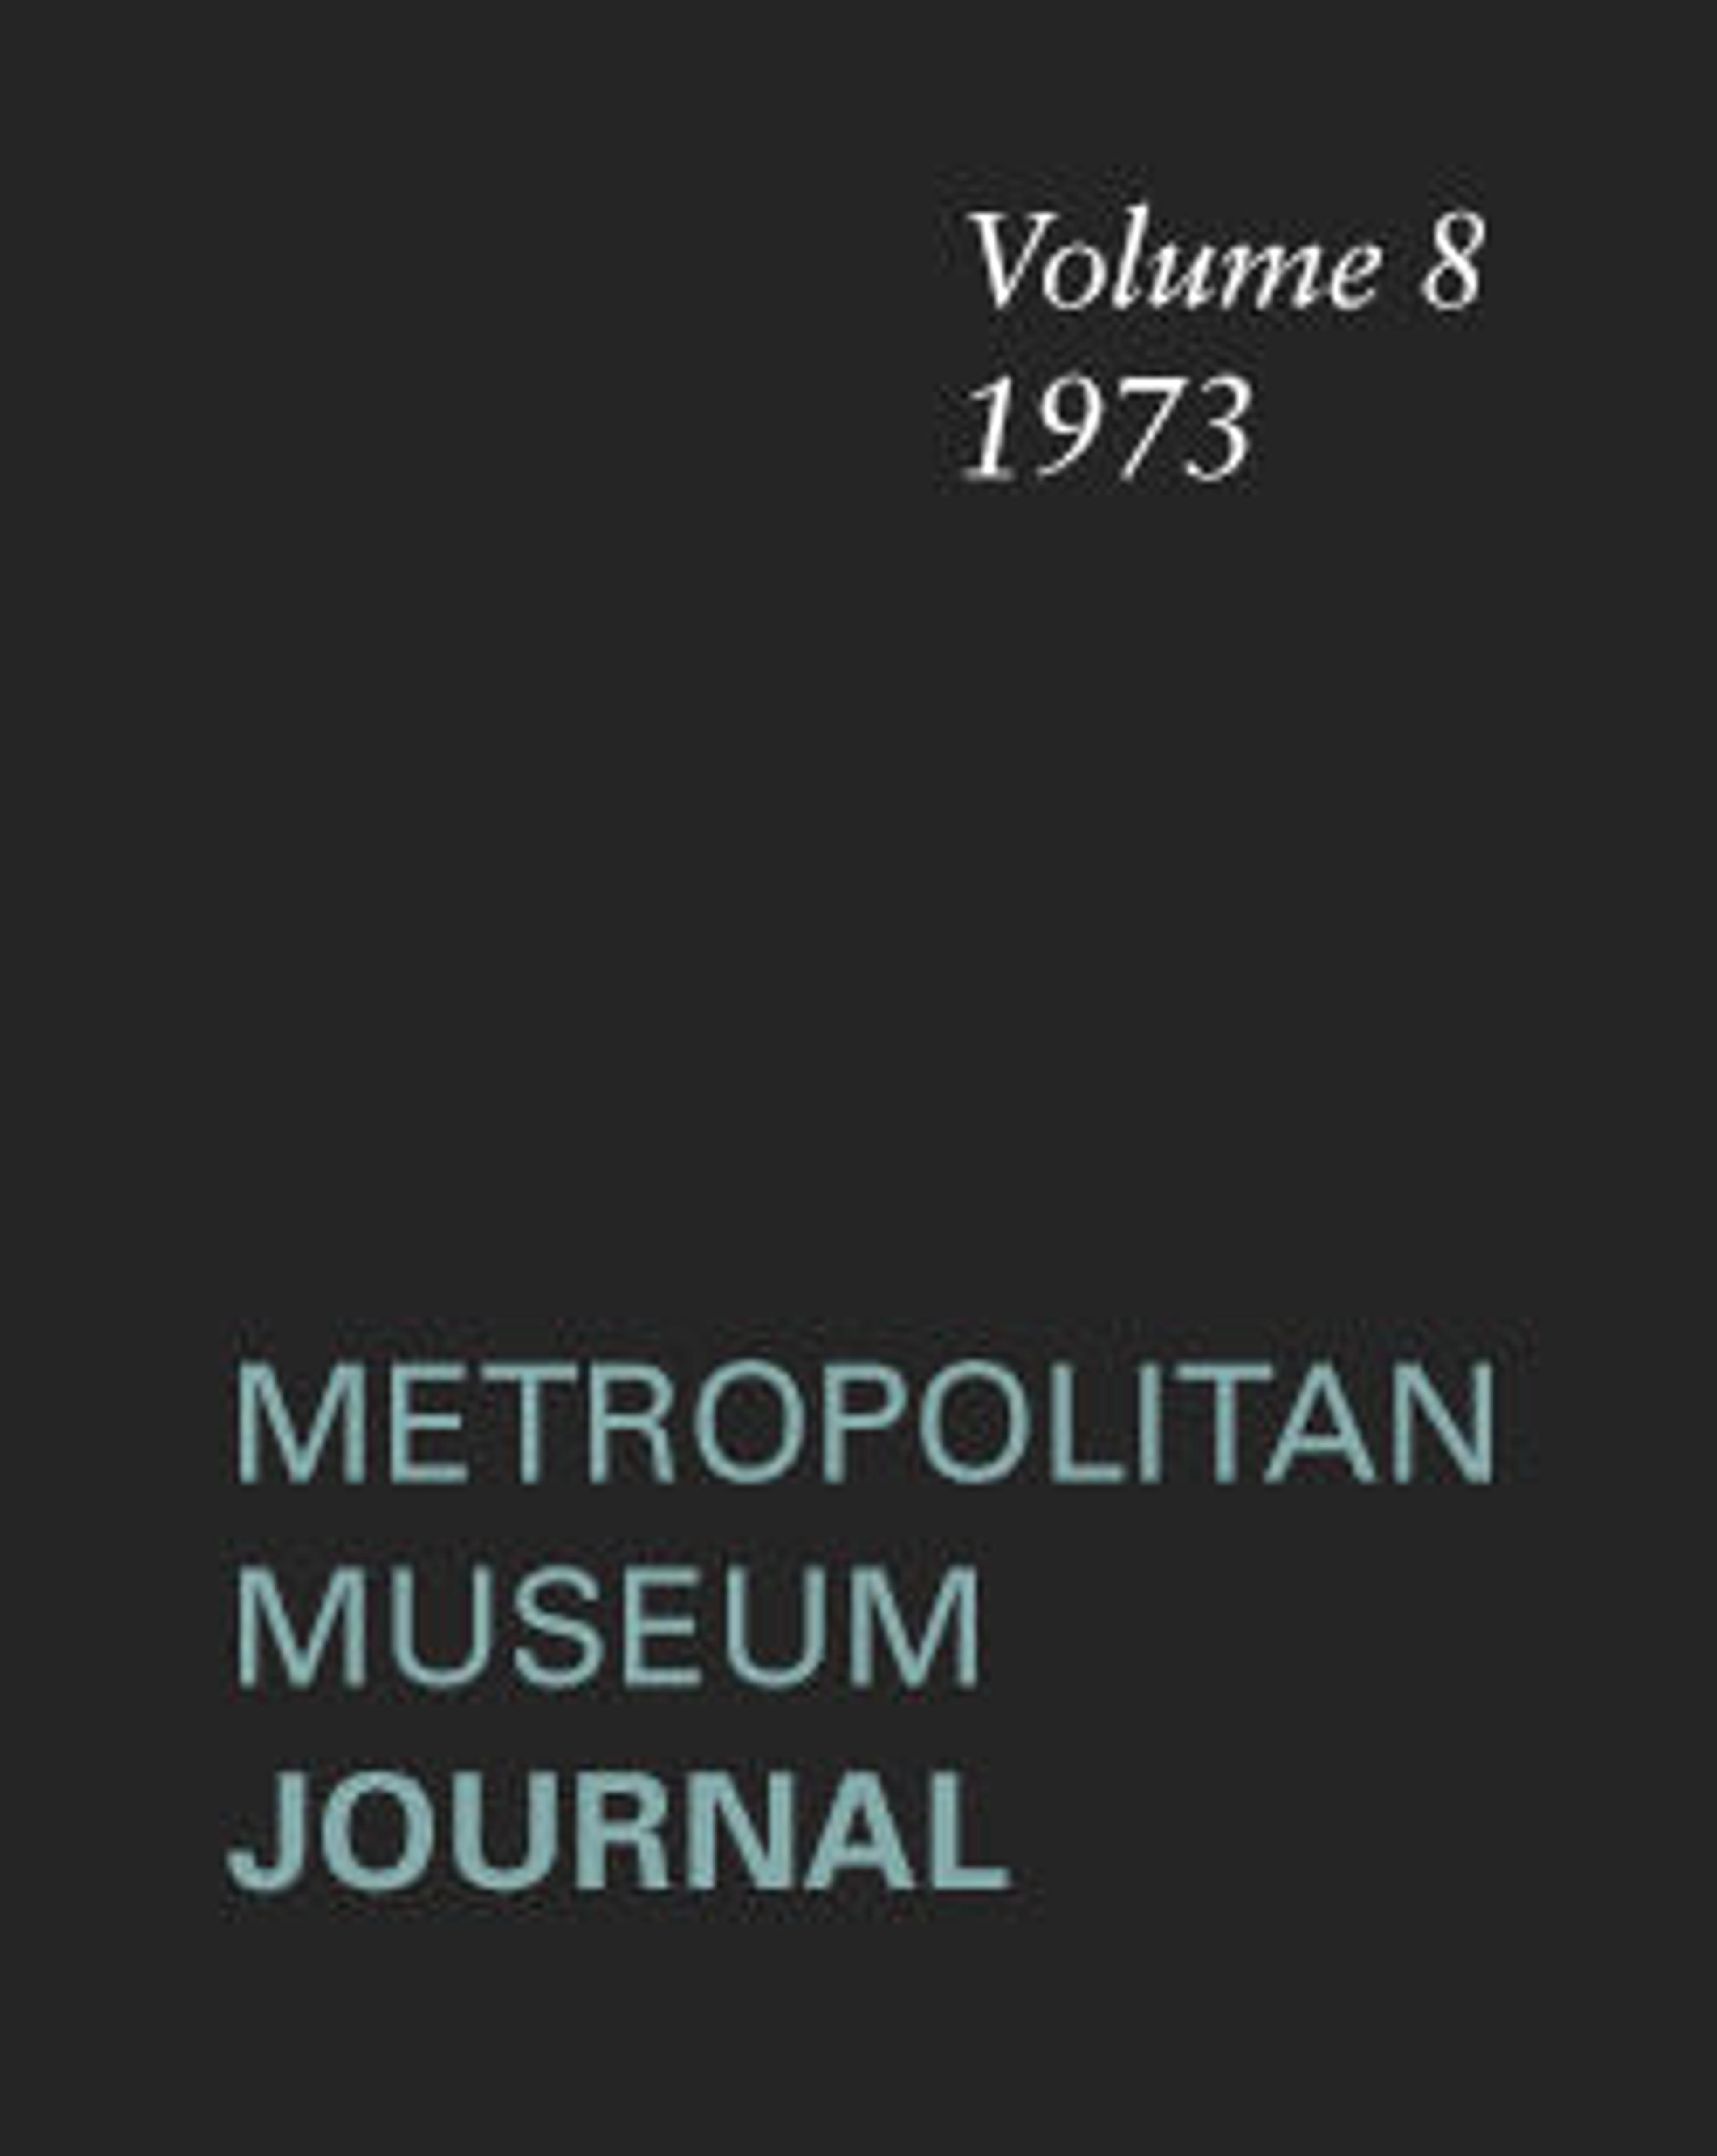 The Metropolitan Museum Journal, v. 8 (1973)